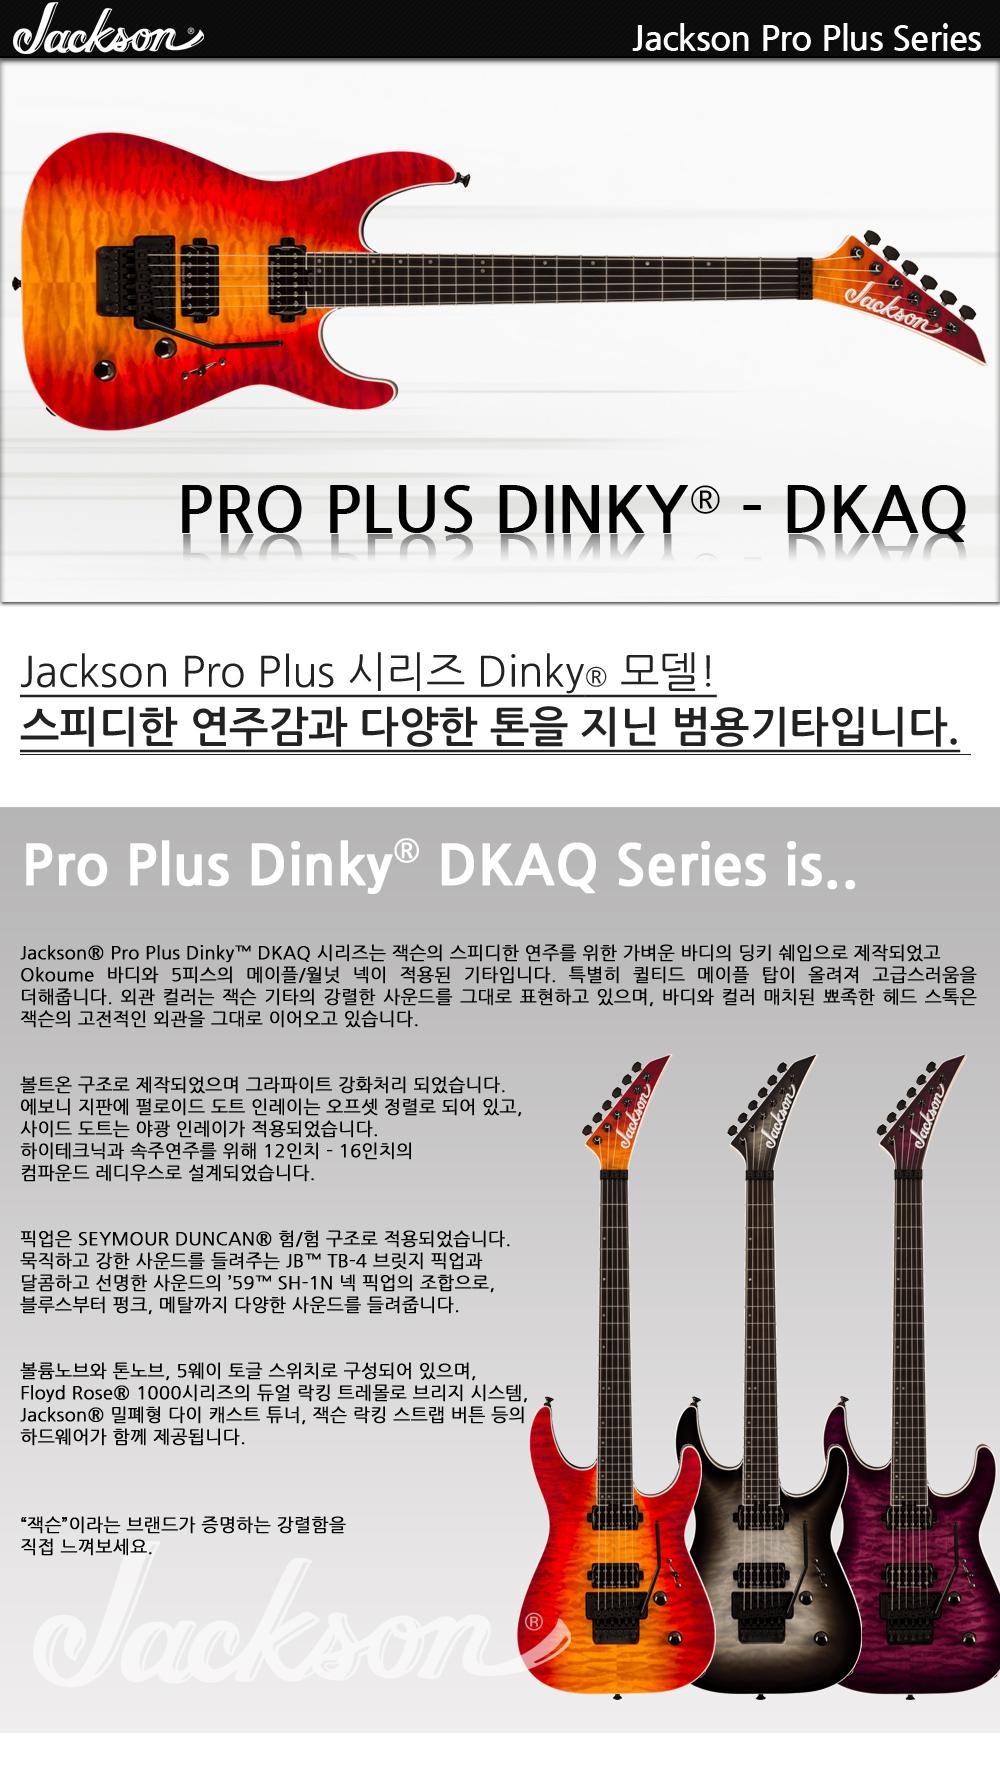 Jackson-ProPlus-Dinky-DKAQ-Firestorm_1_131419.jpg